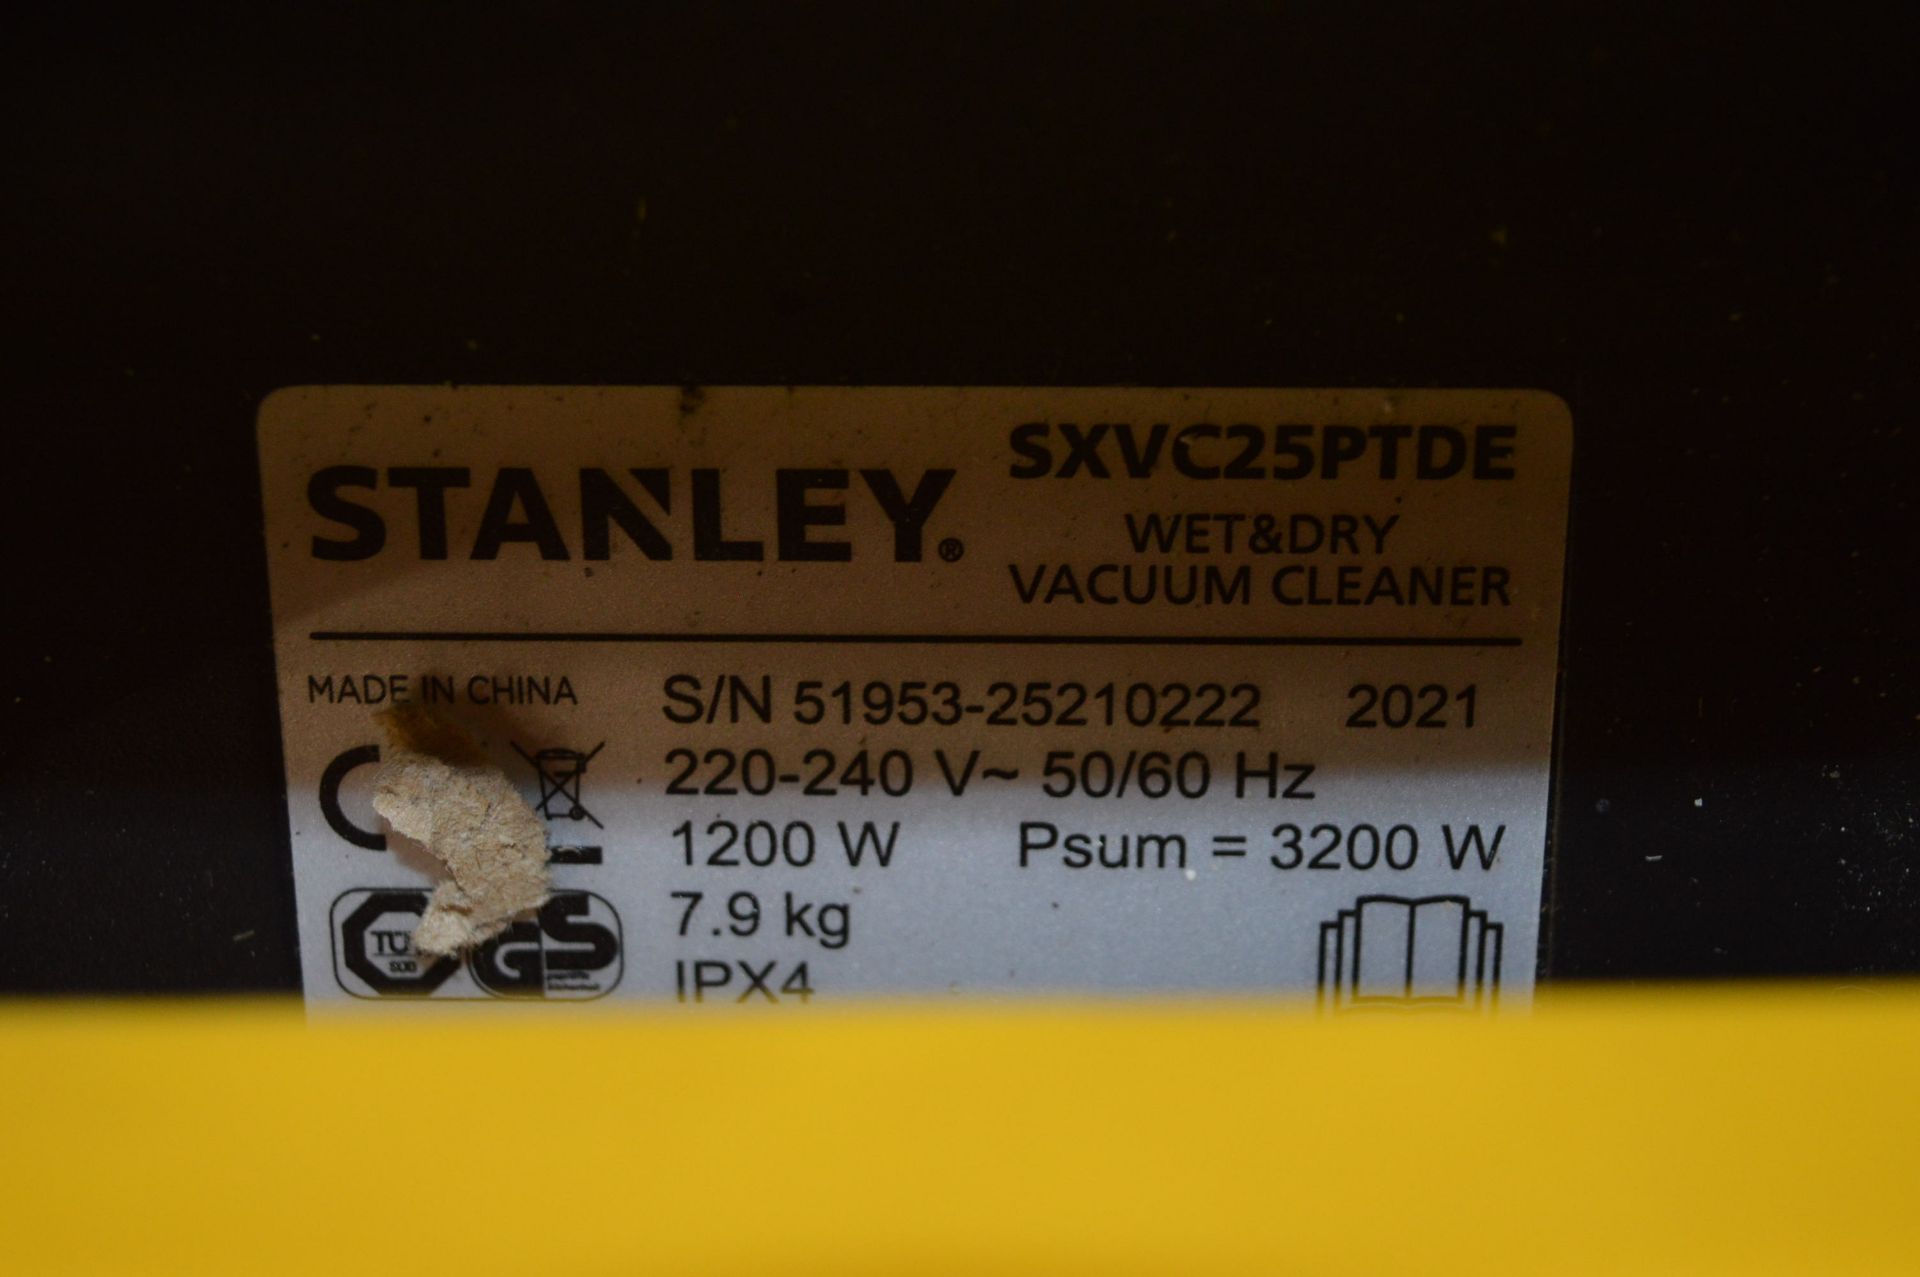 Stanley SXVC25PTDE Wet & Dry Vacuum Cleaner - Image 3 of 3